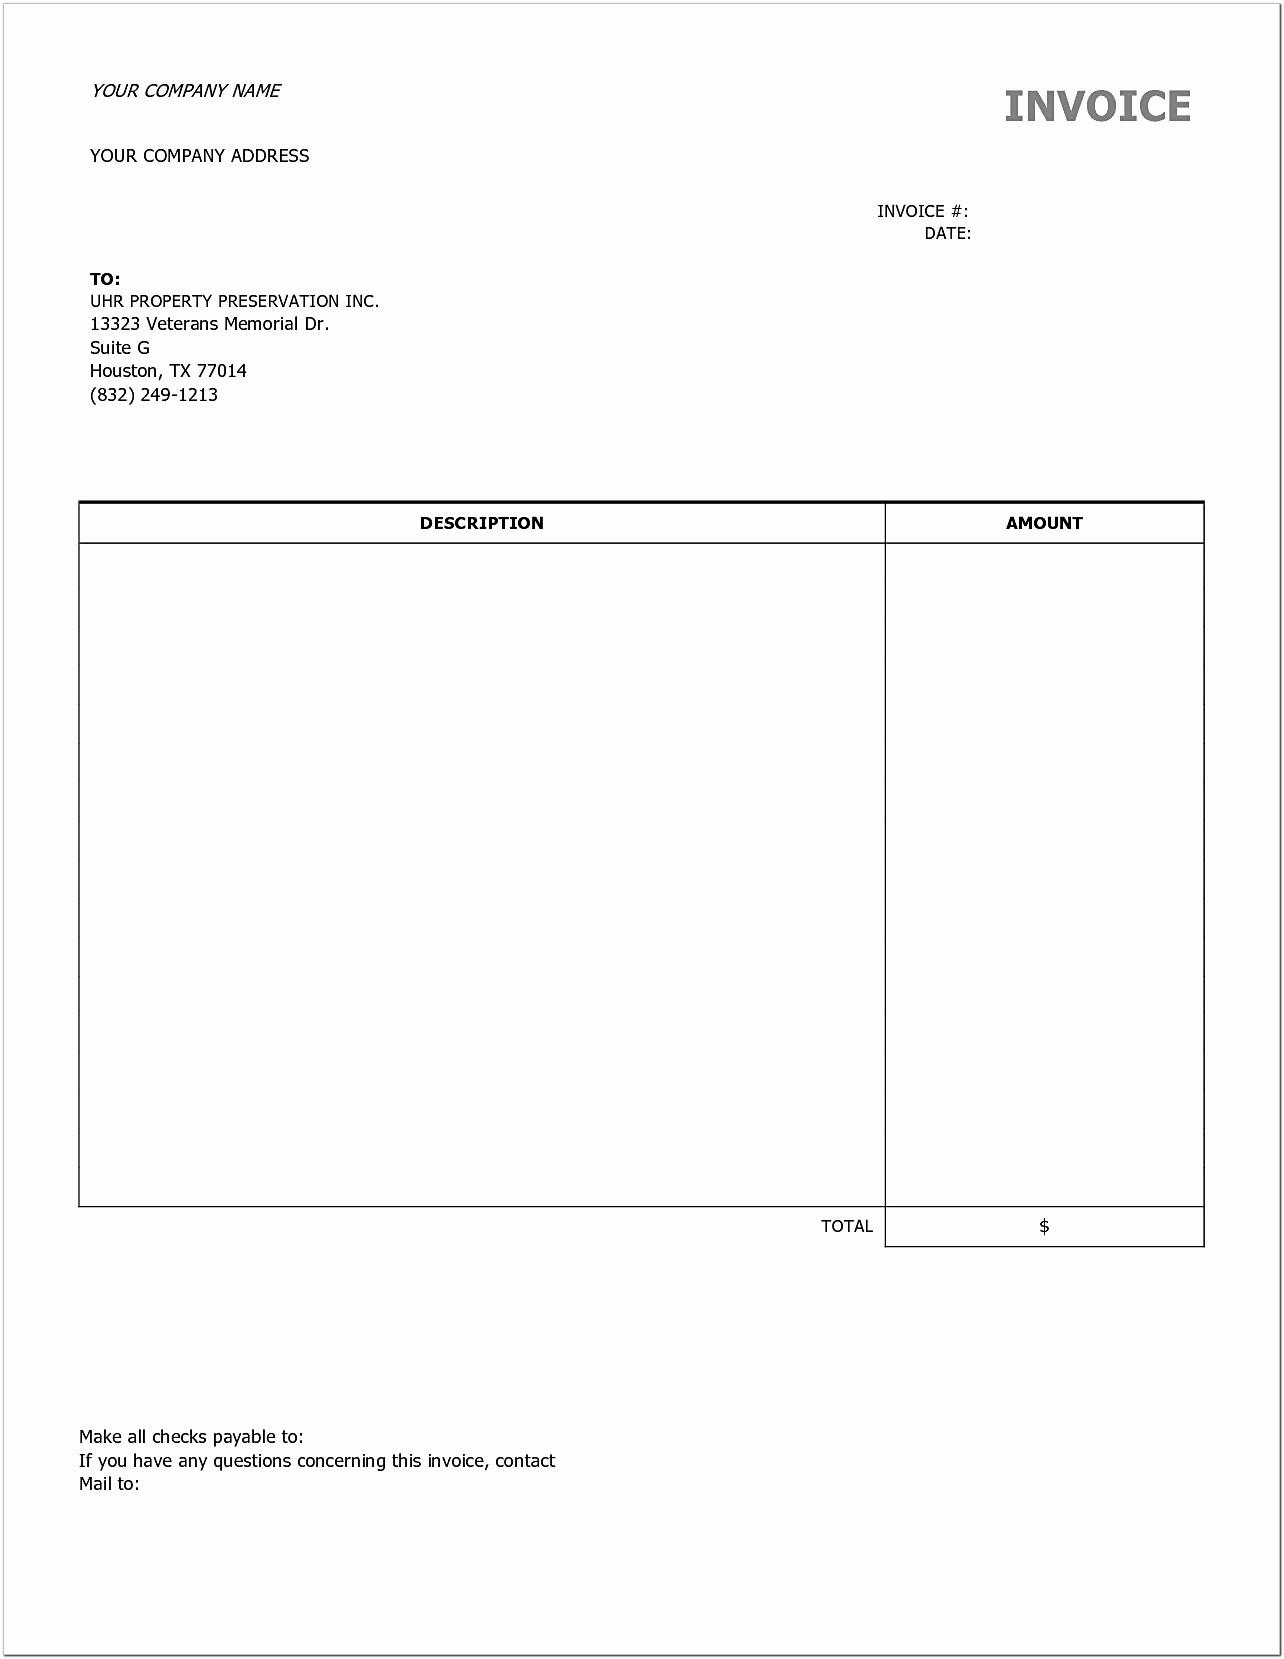 printable-blank-invoice-template-pdf-templates-restiumani-resume-7pyrp6wlb4